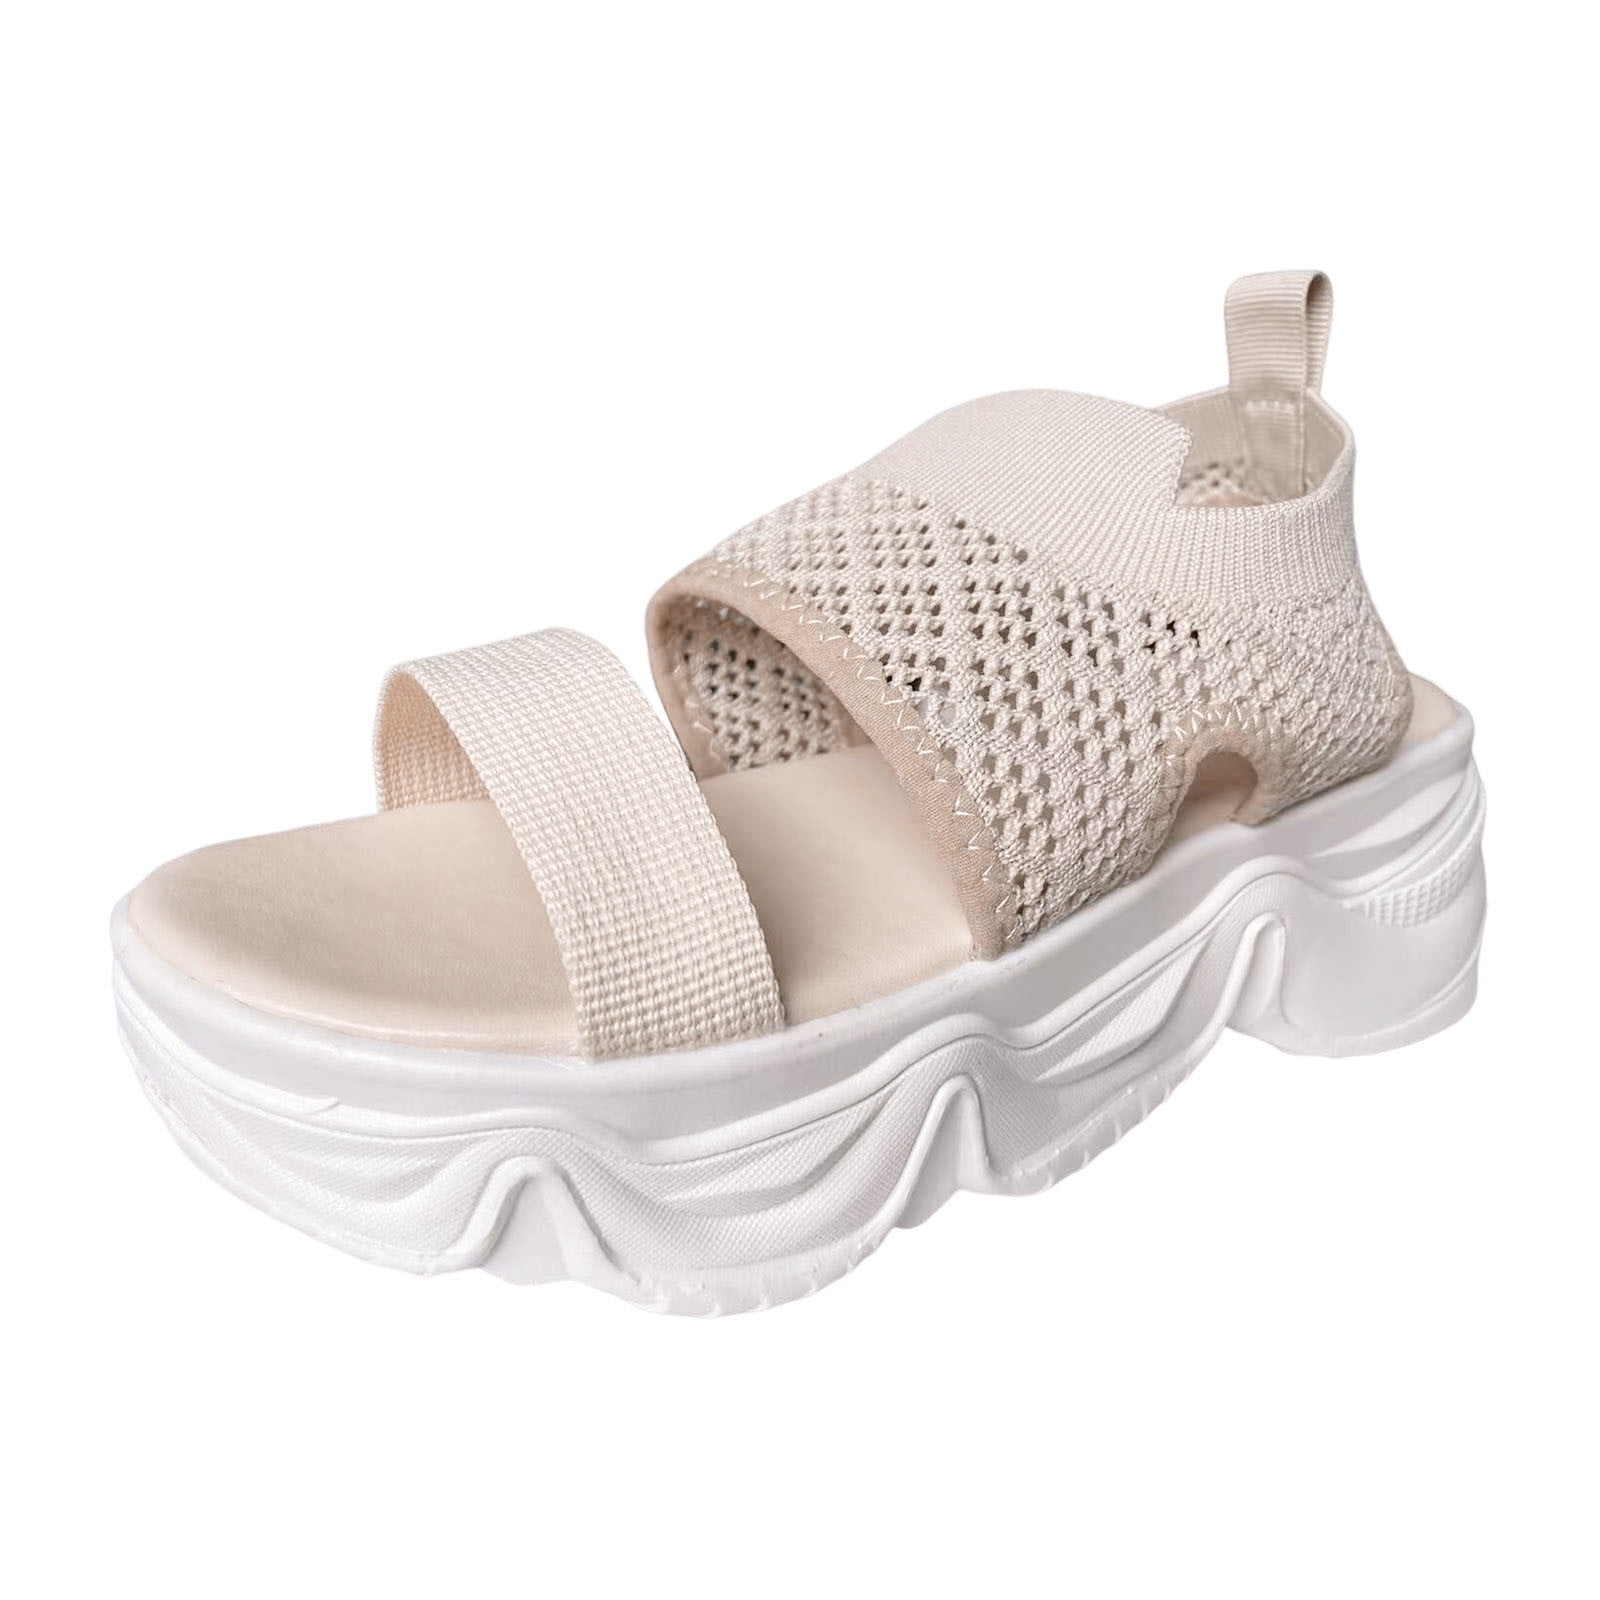 Platform Slip on Sandals for Women Wedges Ladies Fashion Summer Solid ...